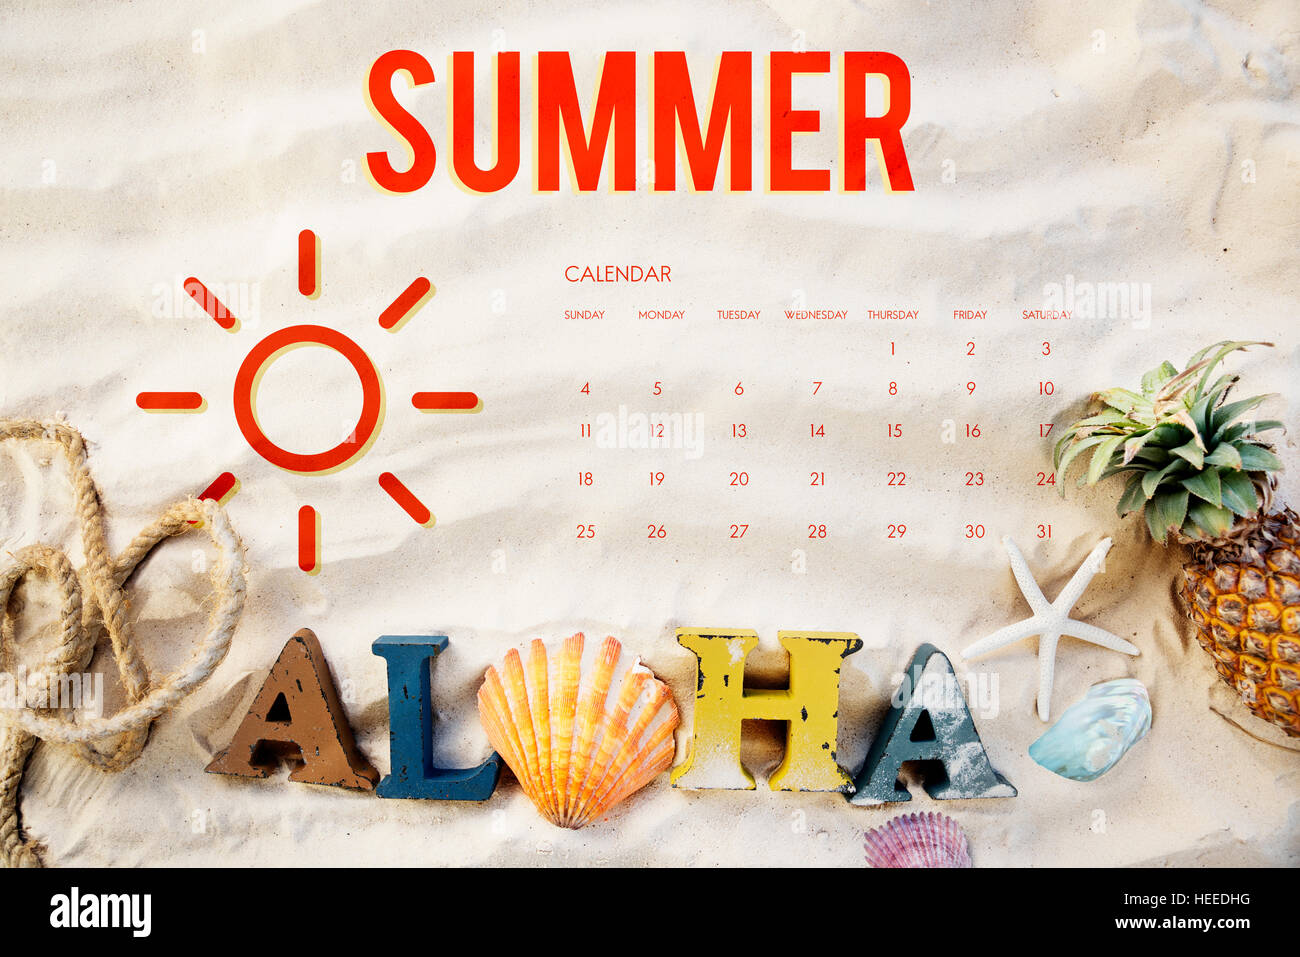 summer-holiday-calendar-sun-graphic-concept-stock-photo-alamy